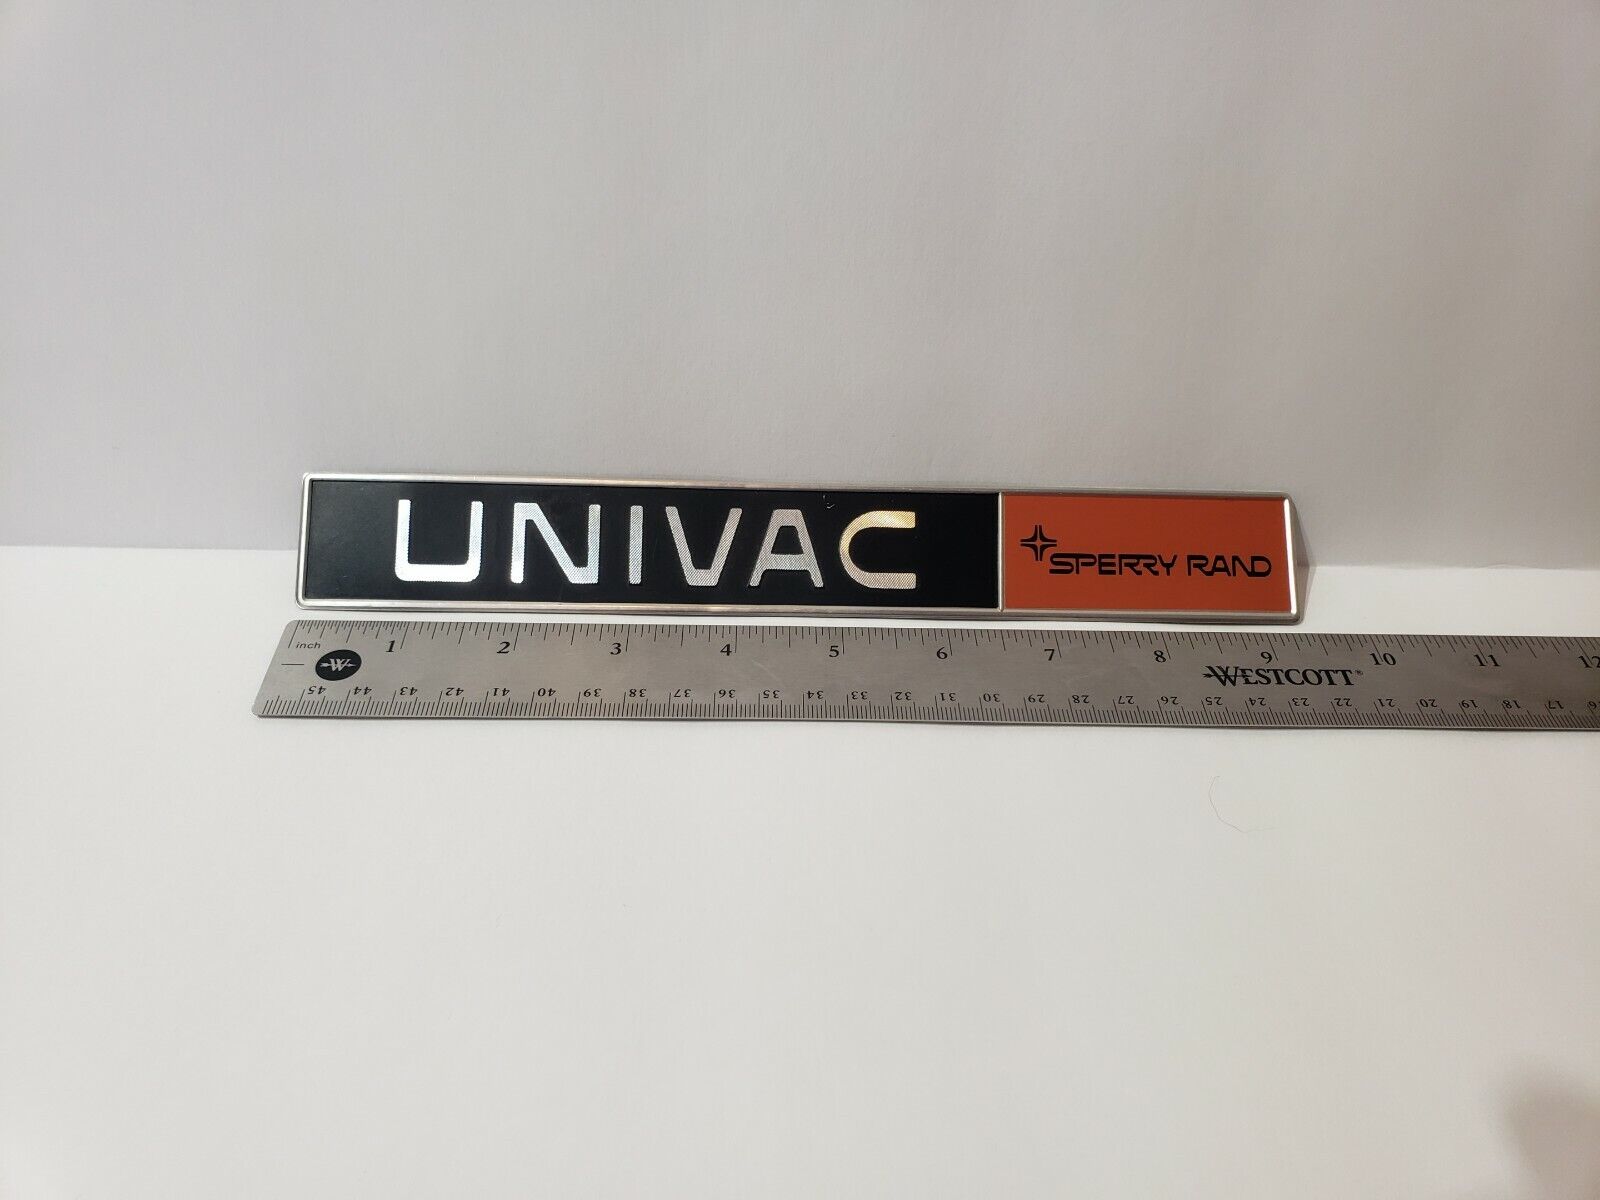 Vintage Univac / Sperry Rand metal mainframe logo 9.5” label.